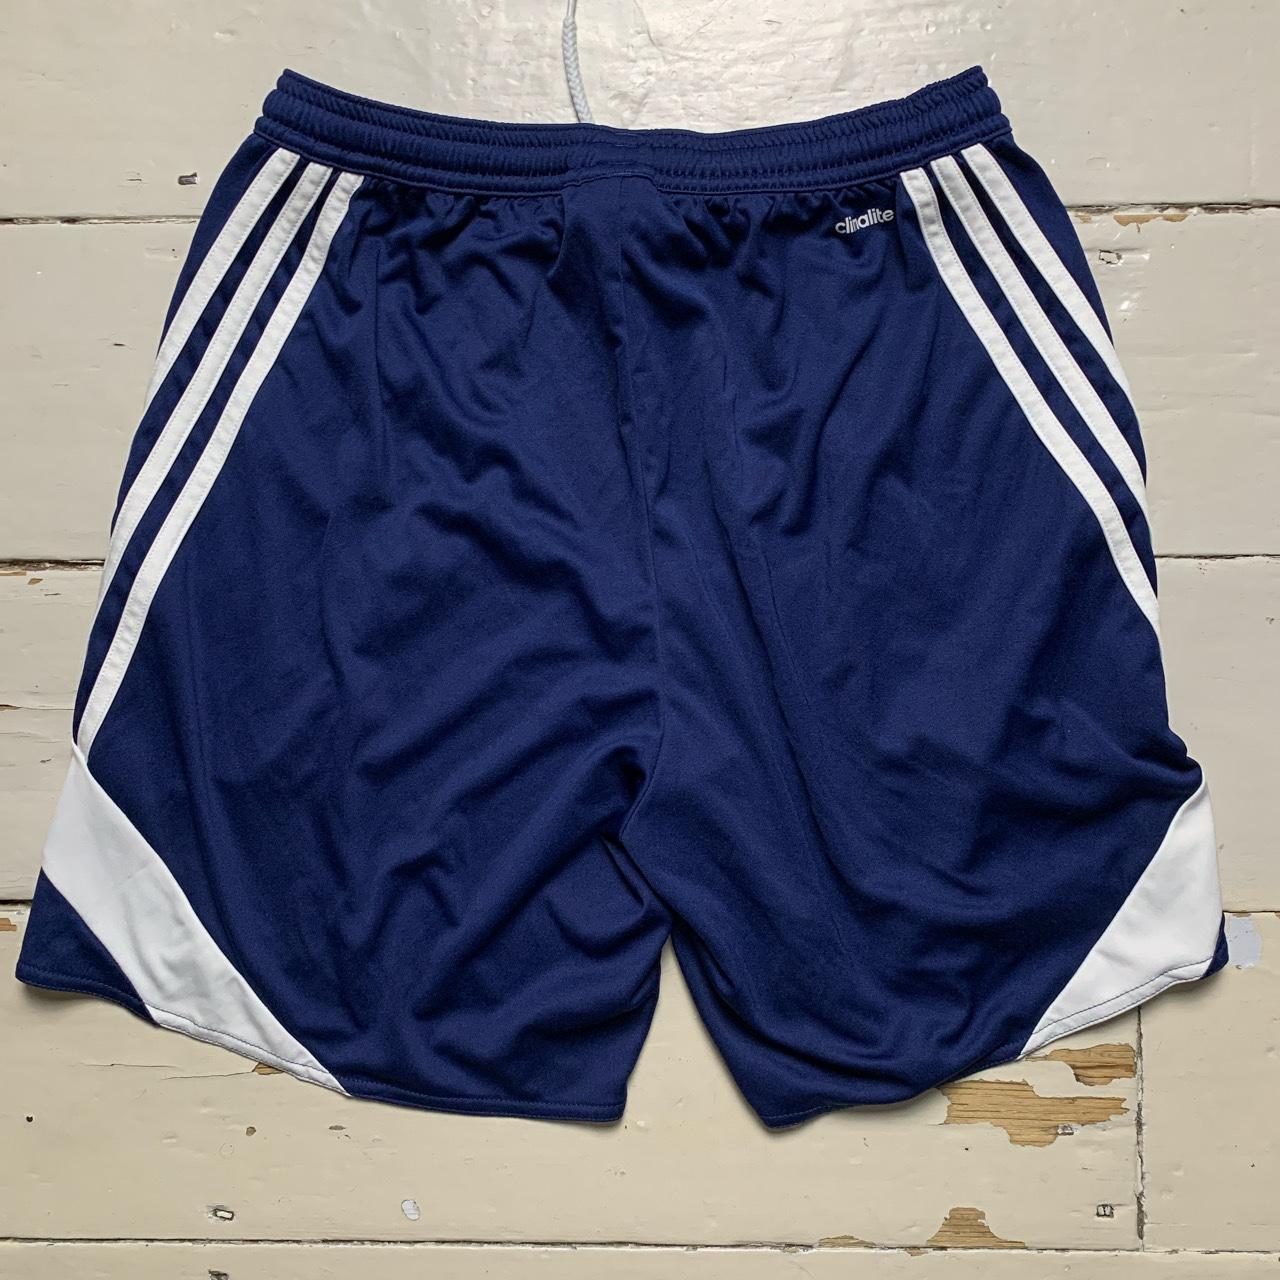 Adidas Football Short Navy and White